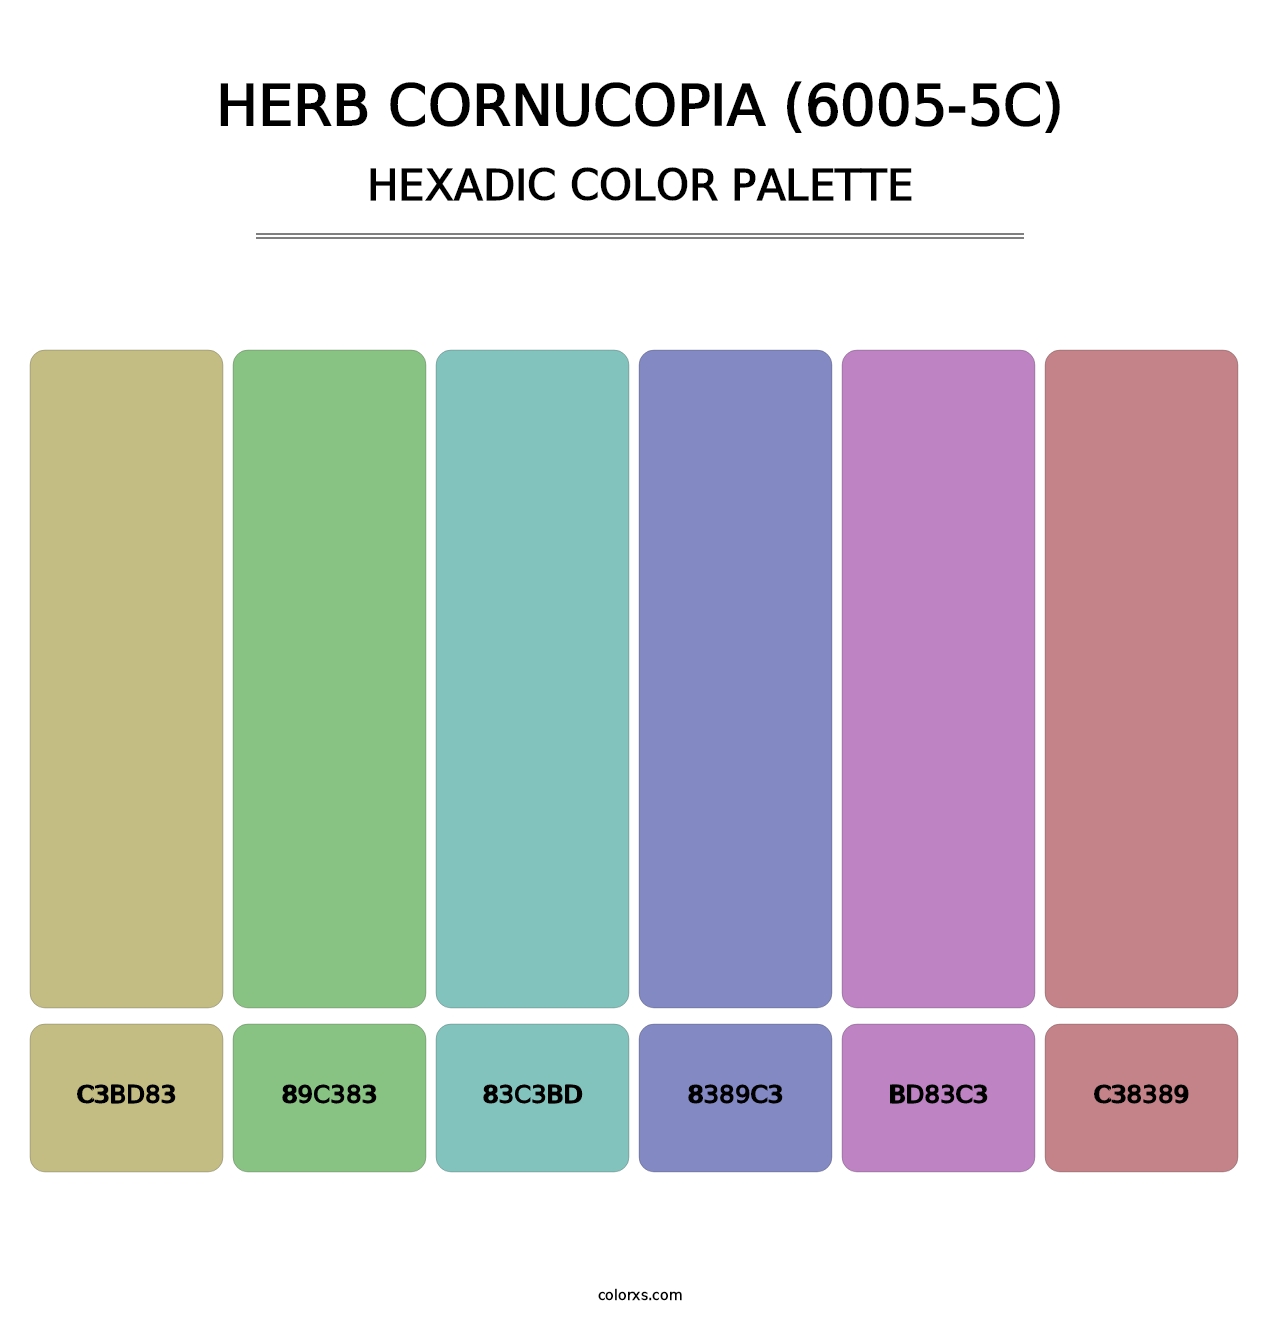 Herb Cornucopia (6005-5C) - Hexadic Color Palette